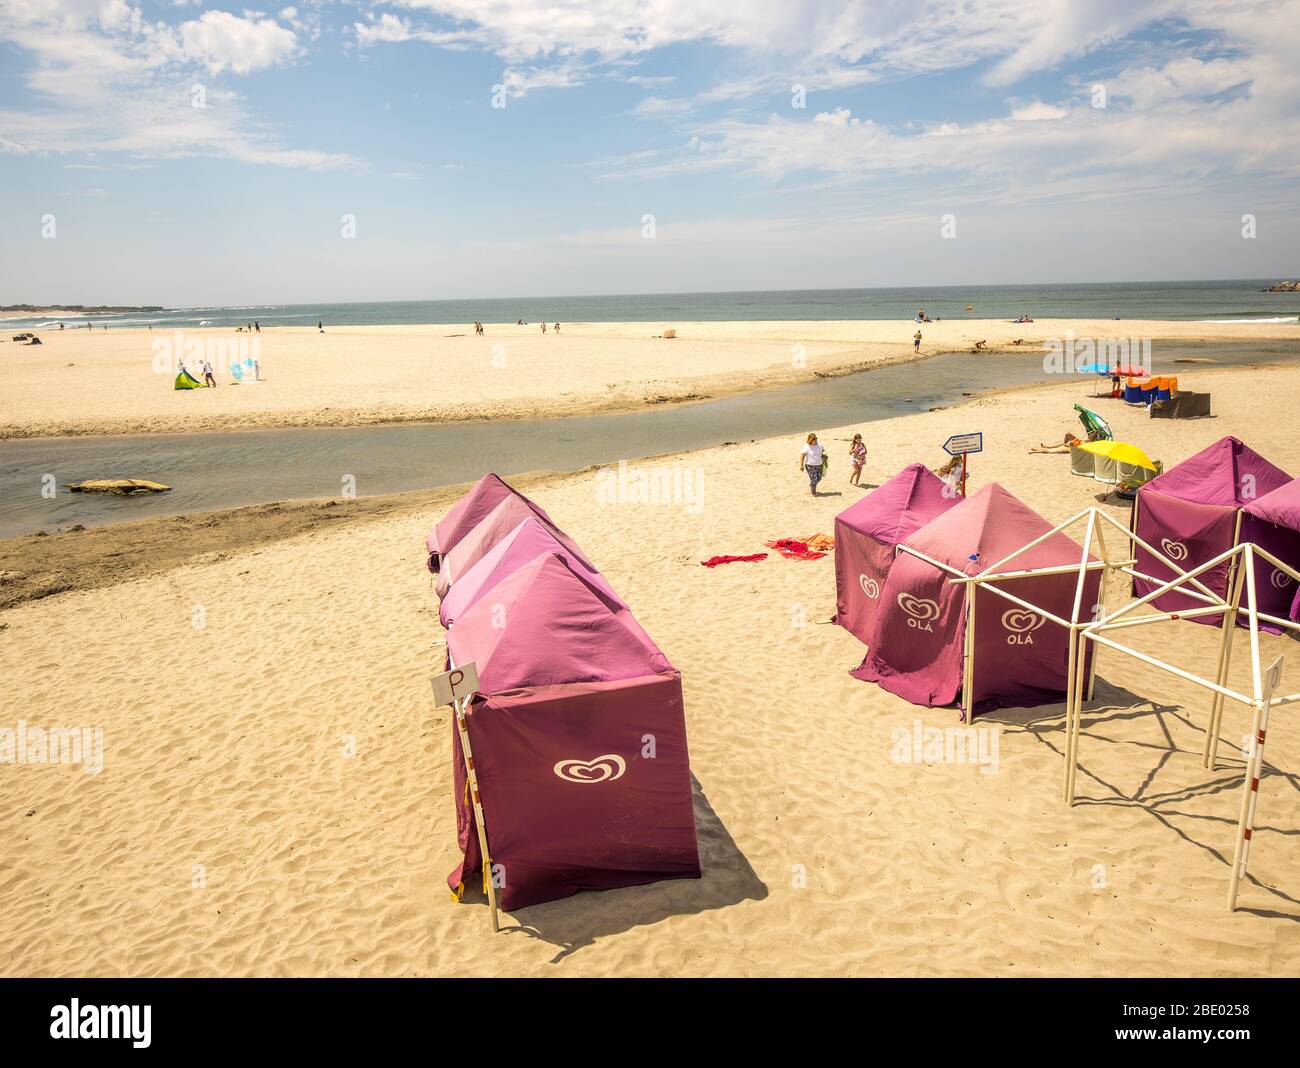 Beach tents at the coastal resort of vila praia de ancora Northern Portugal Stock Photo